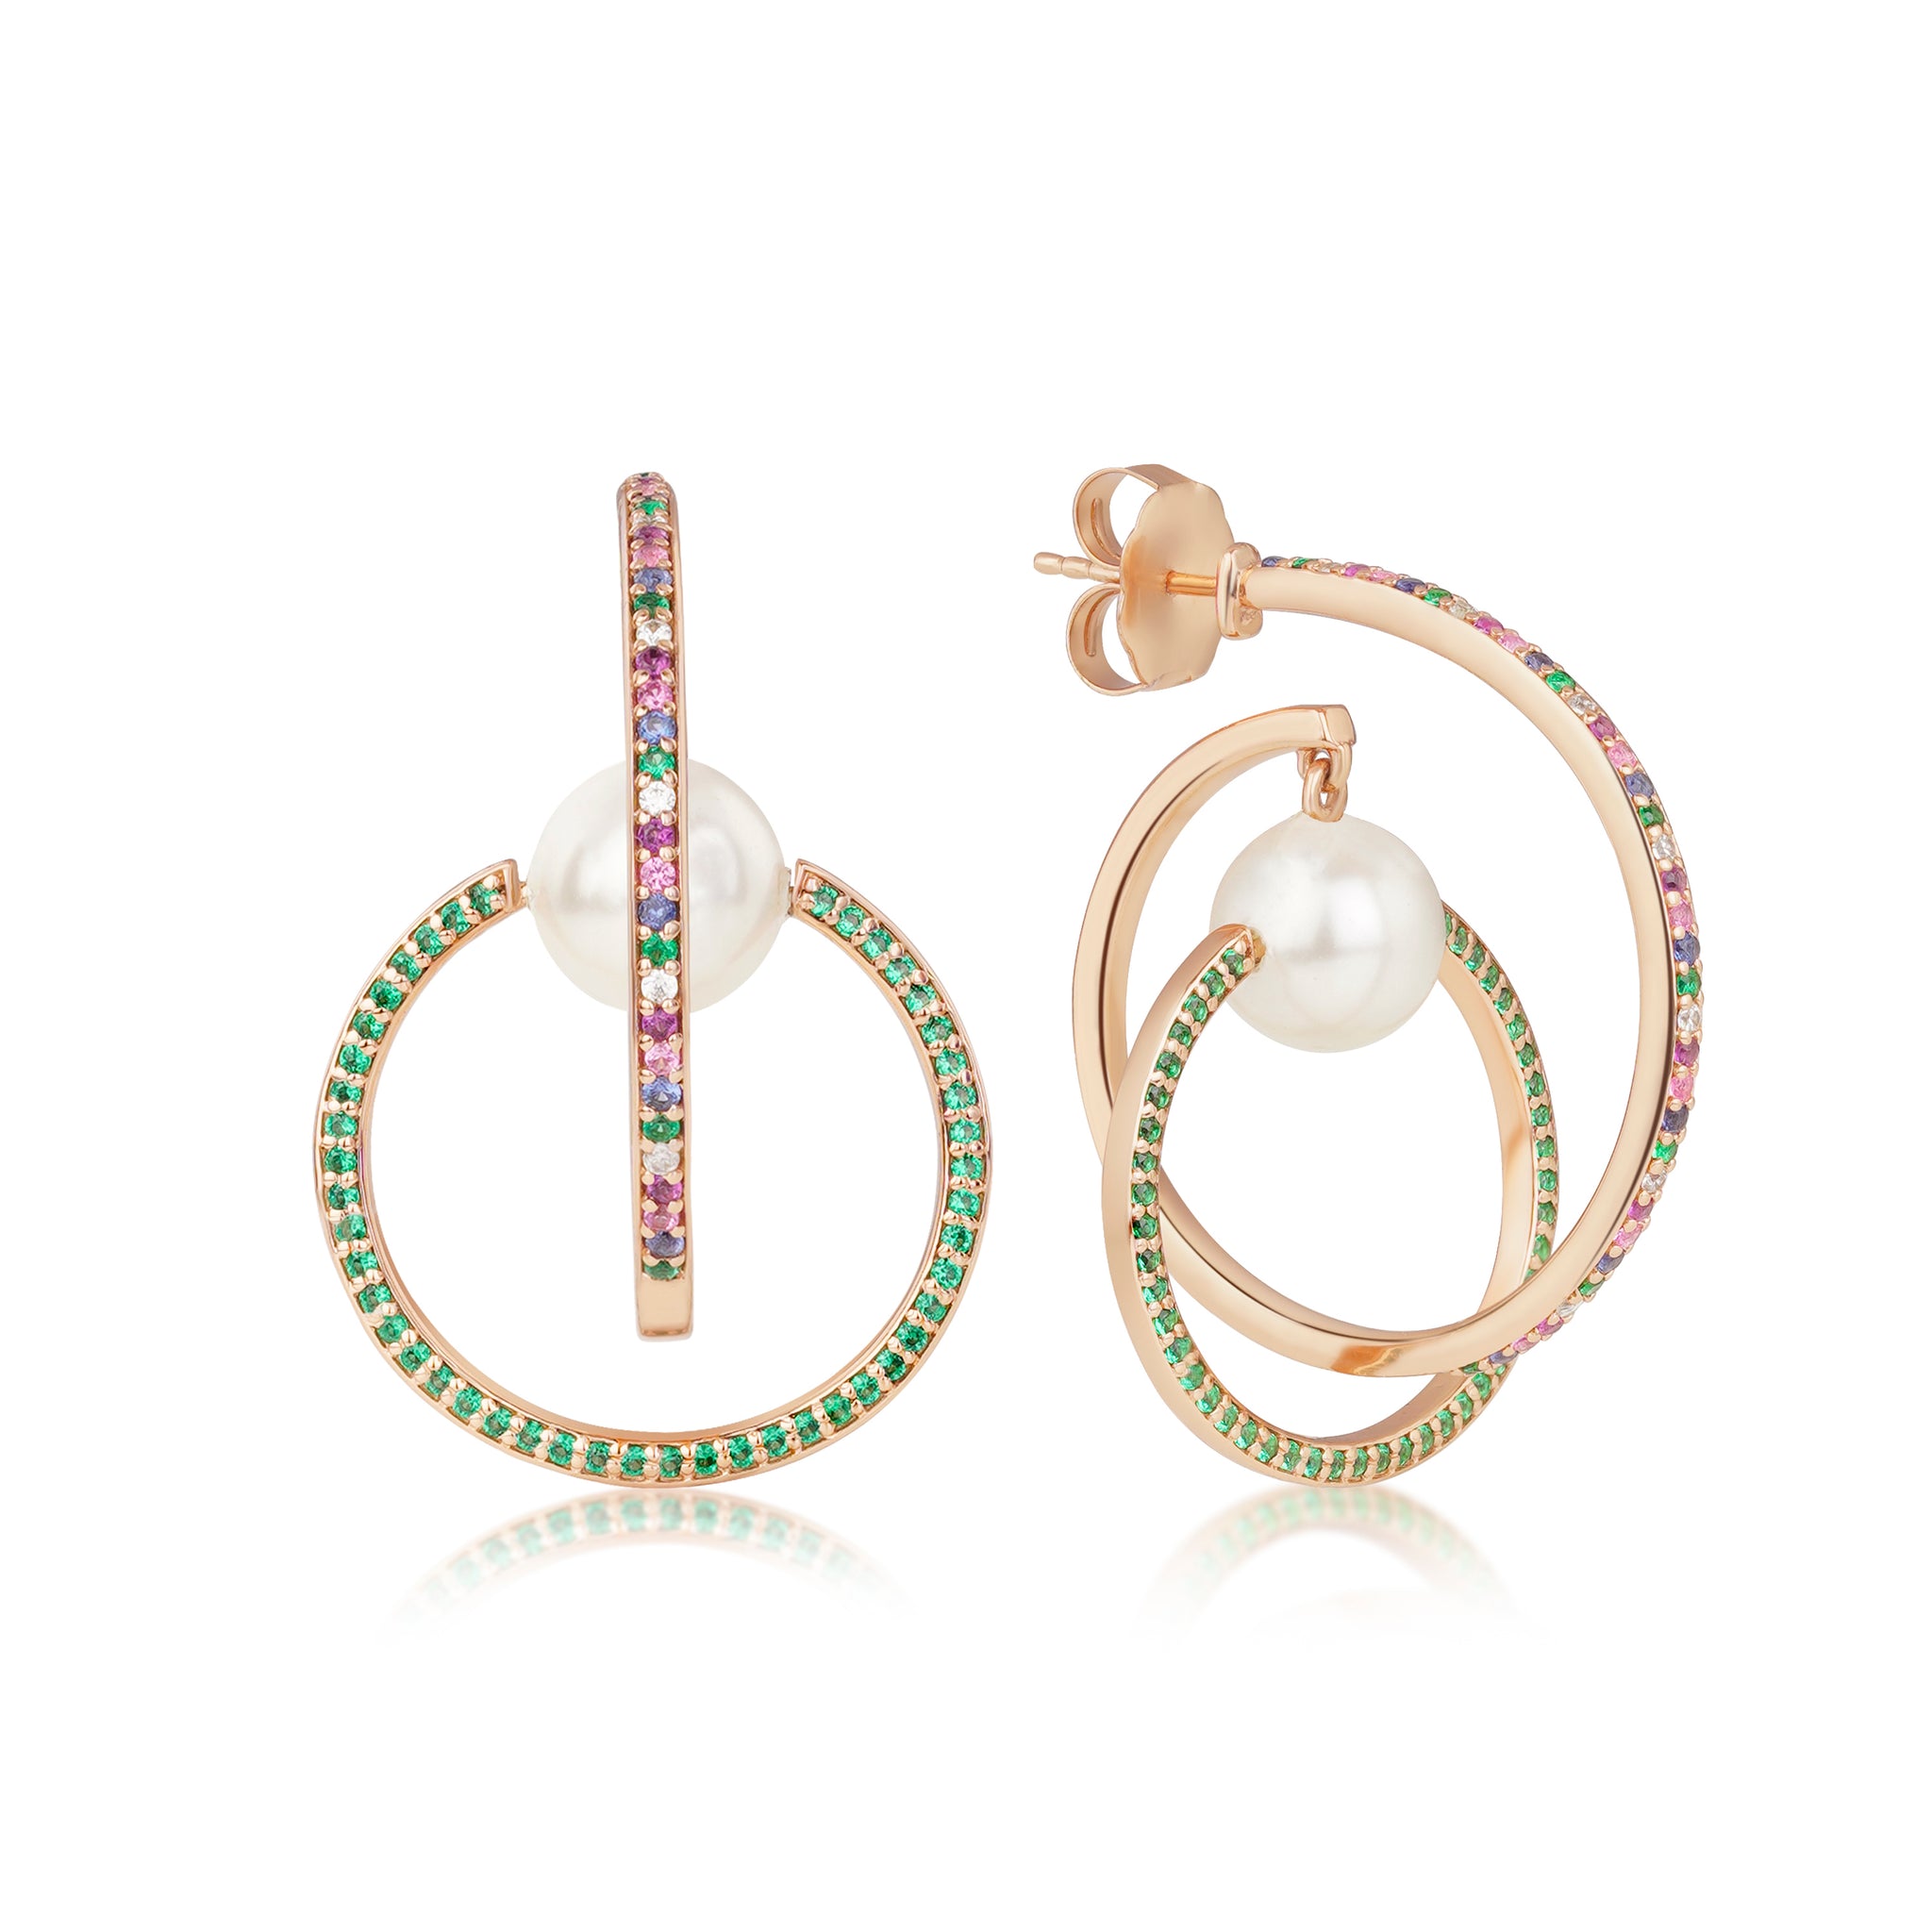 Orbit of Pearl Earrings - Pink and Green